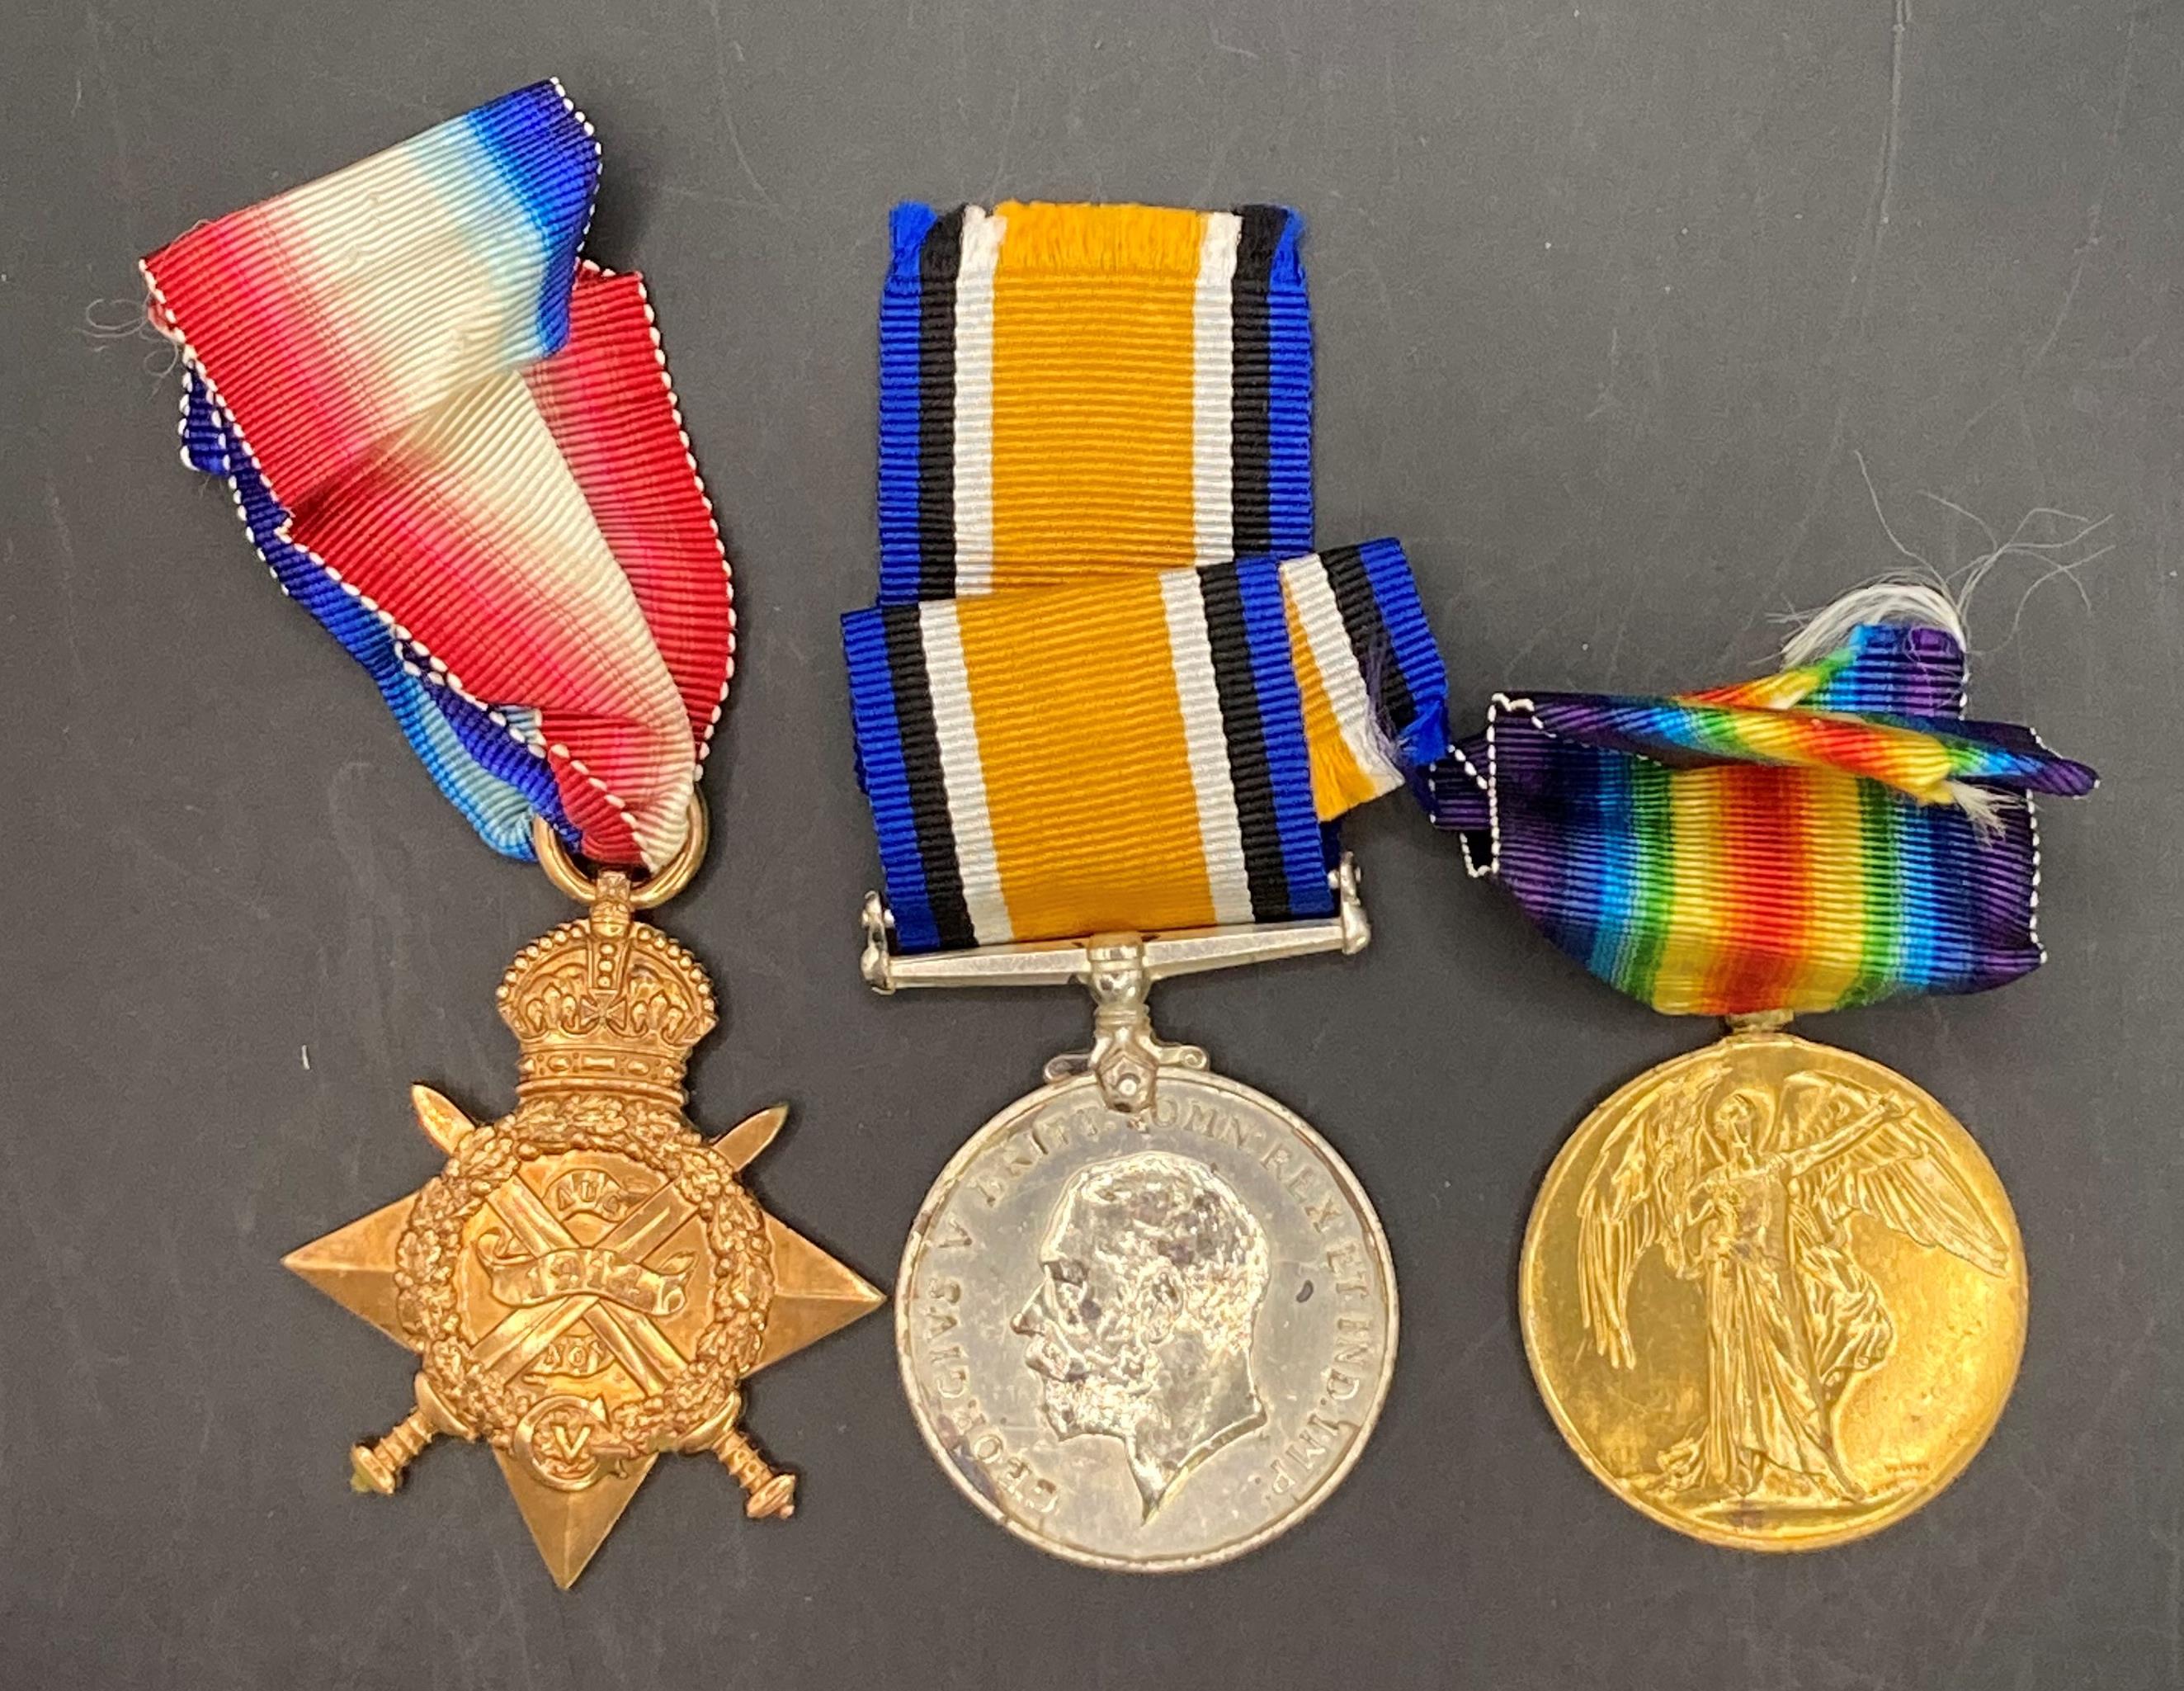 Three First World War medals - 1914 Star,